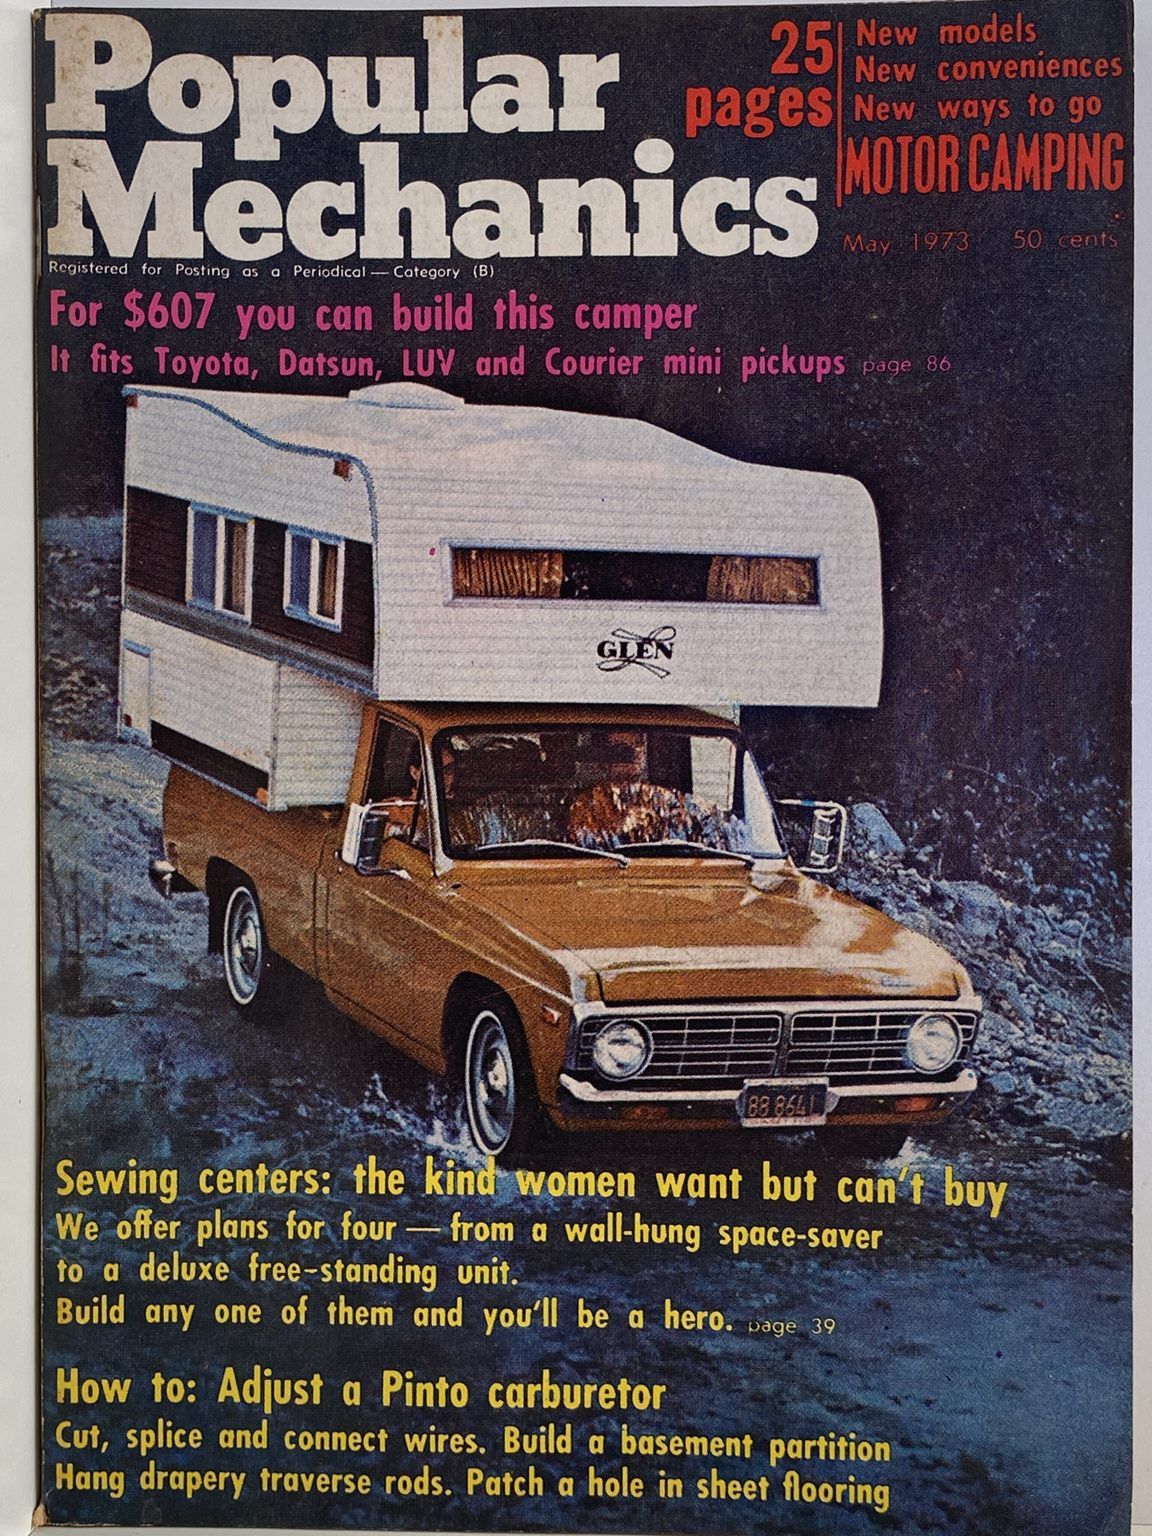 VINTAGE MAGAZINE: Popular Mechanics - Vol. 139, No. 3 - May 1973